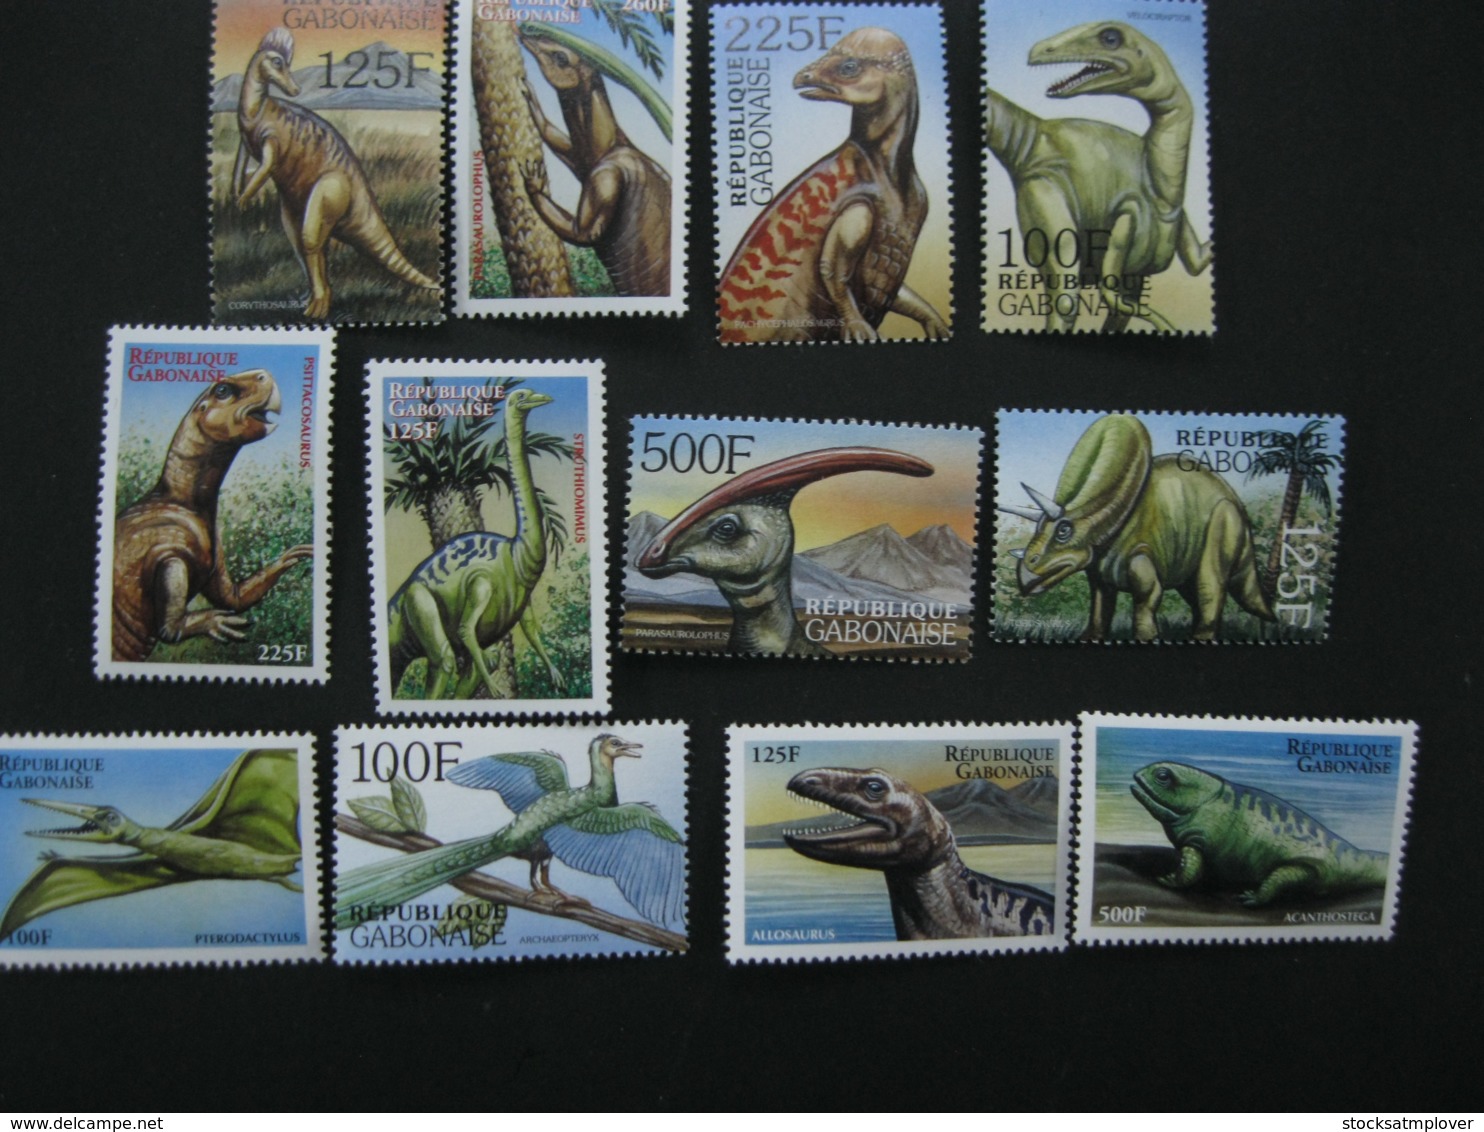 Gabon  2000 Dinosaurs  12 Stamps  SCOTT No.1000-1011  I201807 - Gabon (1960-...)